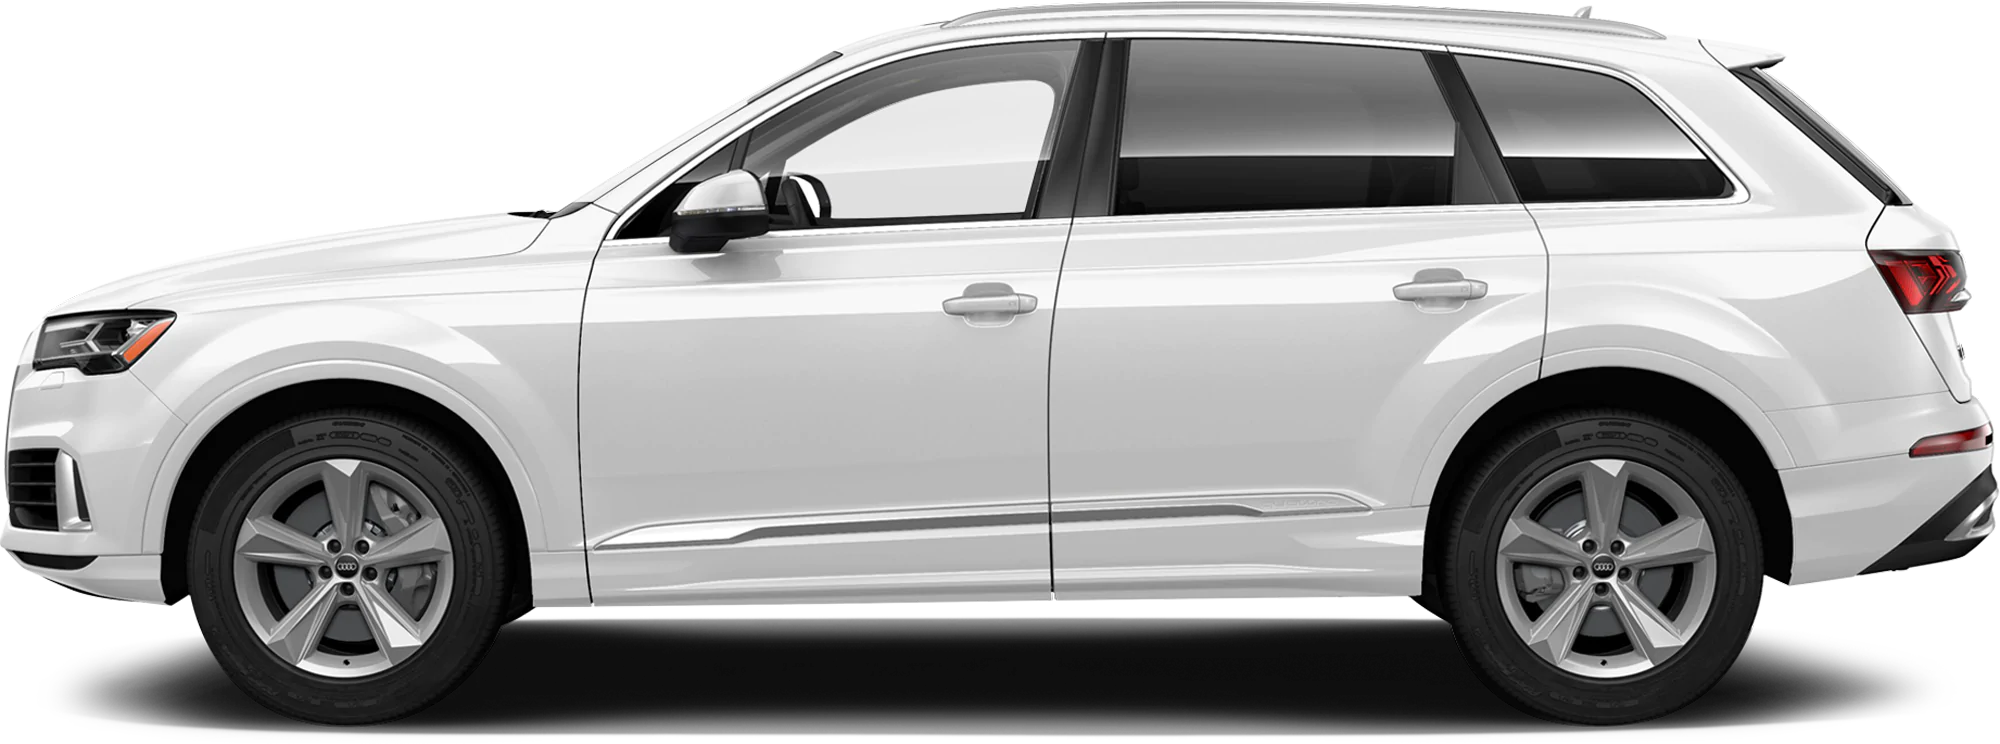 Вид сбоку Audi SUV PNG Image